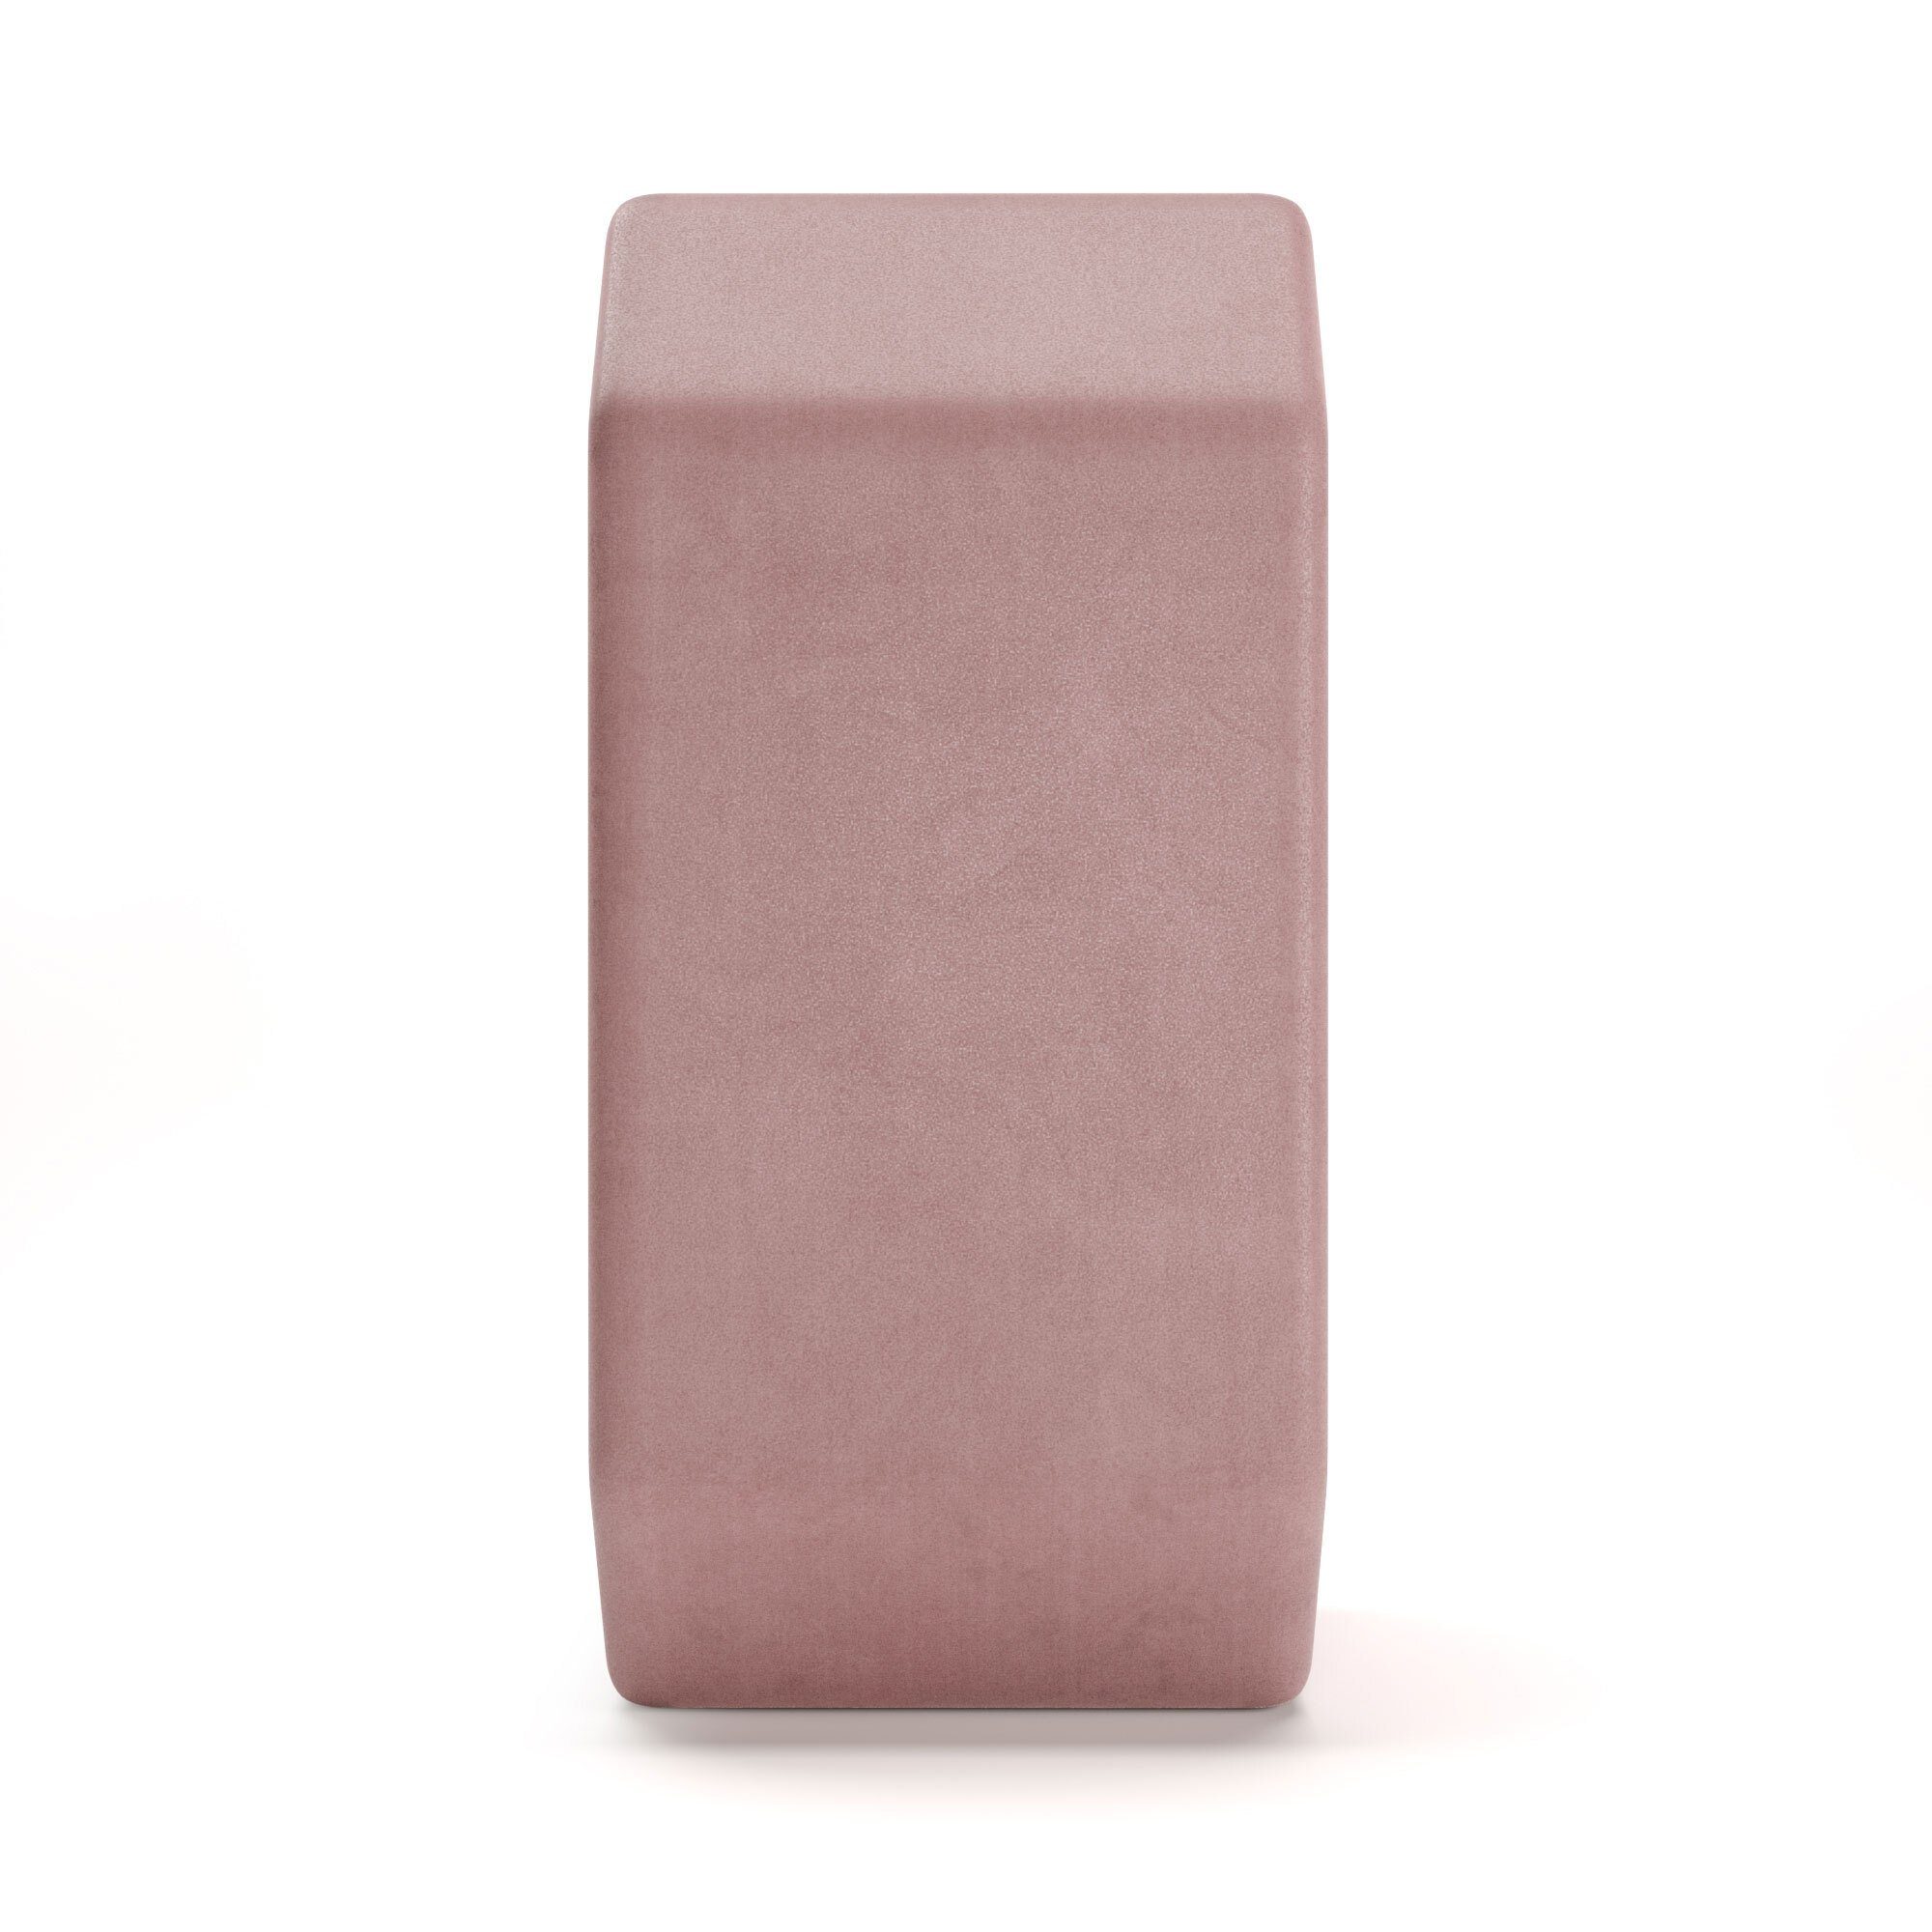 YEAZ Yogablock NEXT LEVEL set - yoga-blöcke & handtuch, rutschfeste Soft-Touch Oberfläche pink